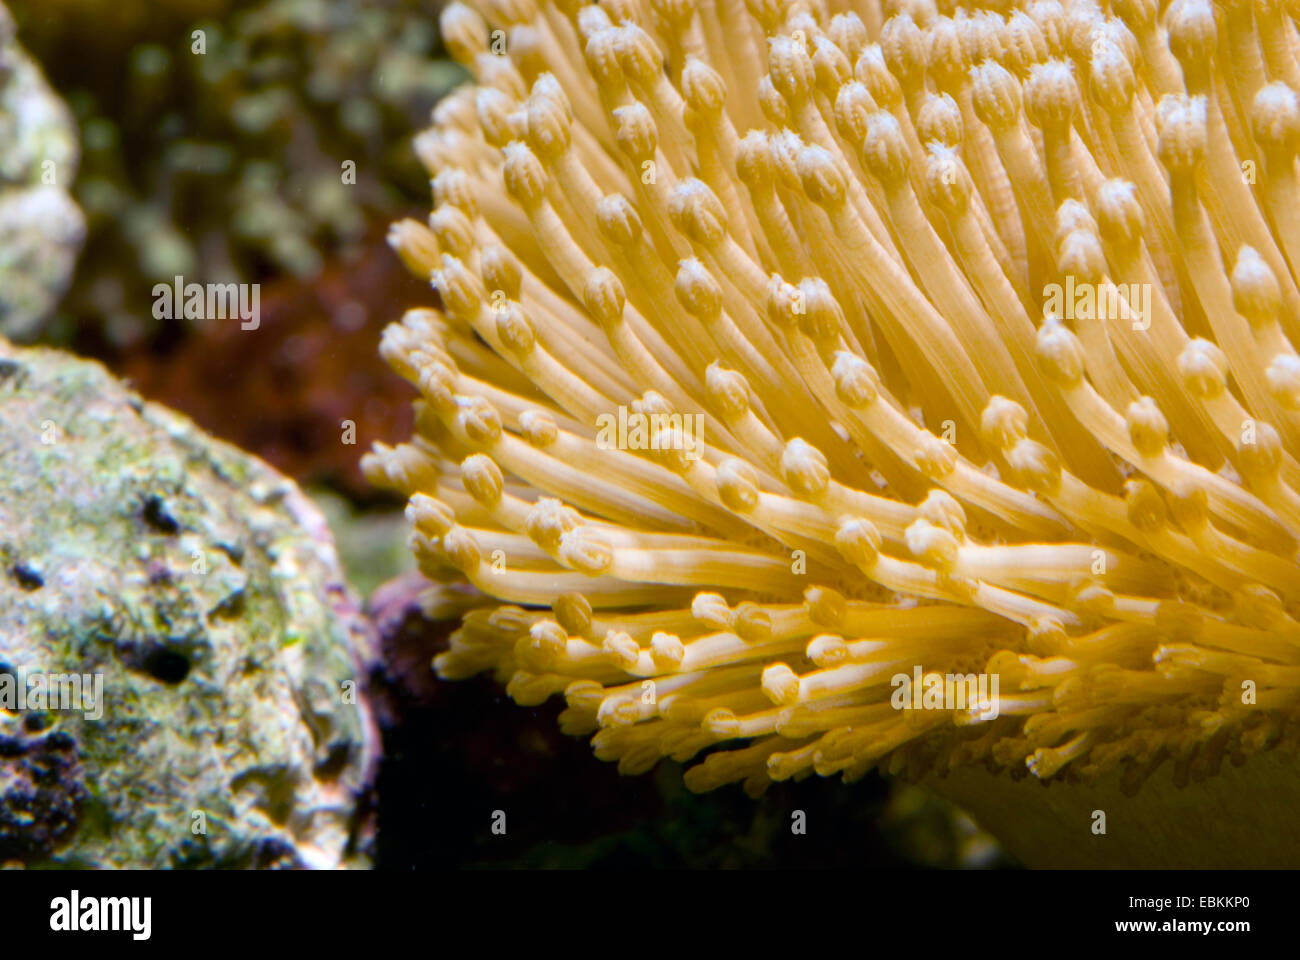 Leather Coral (Sarcophyton ehrenbergi ), close-up view Stock Photo